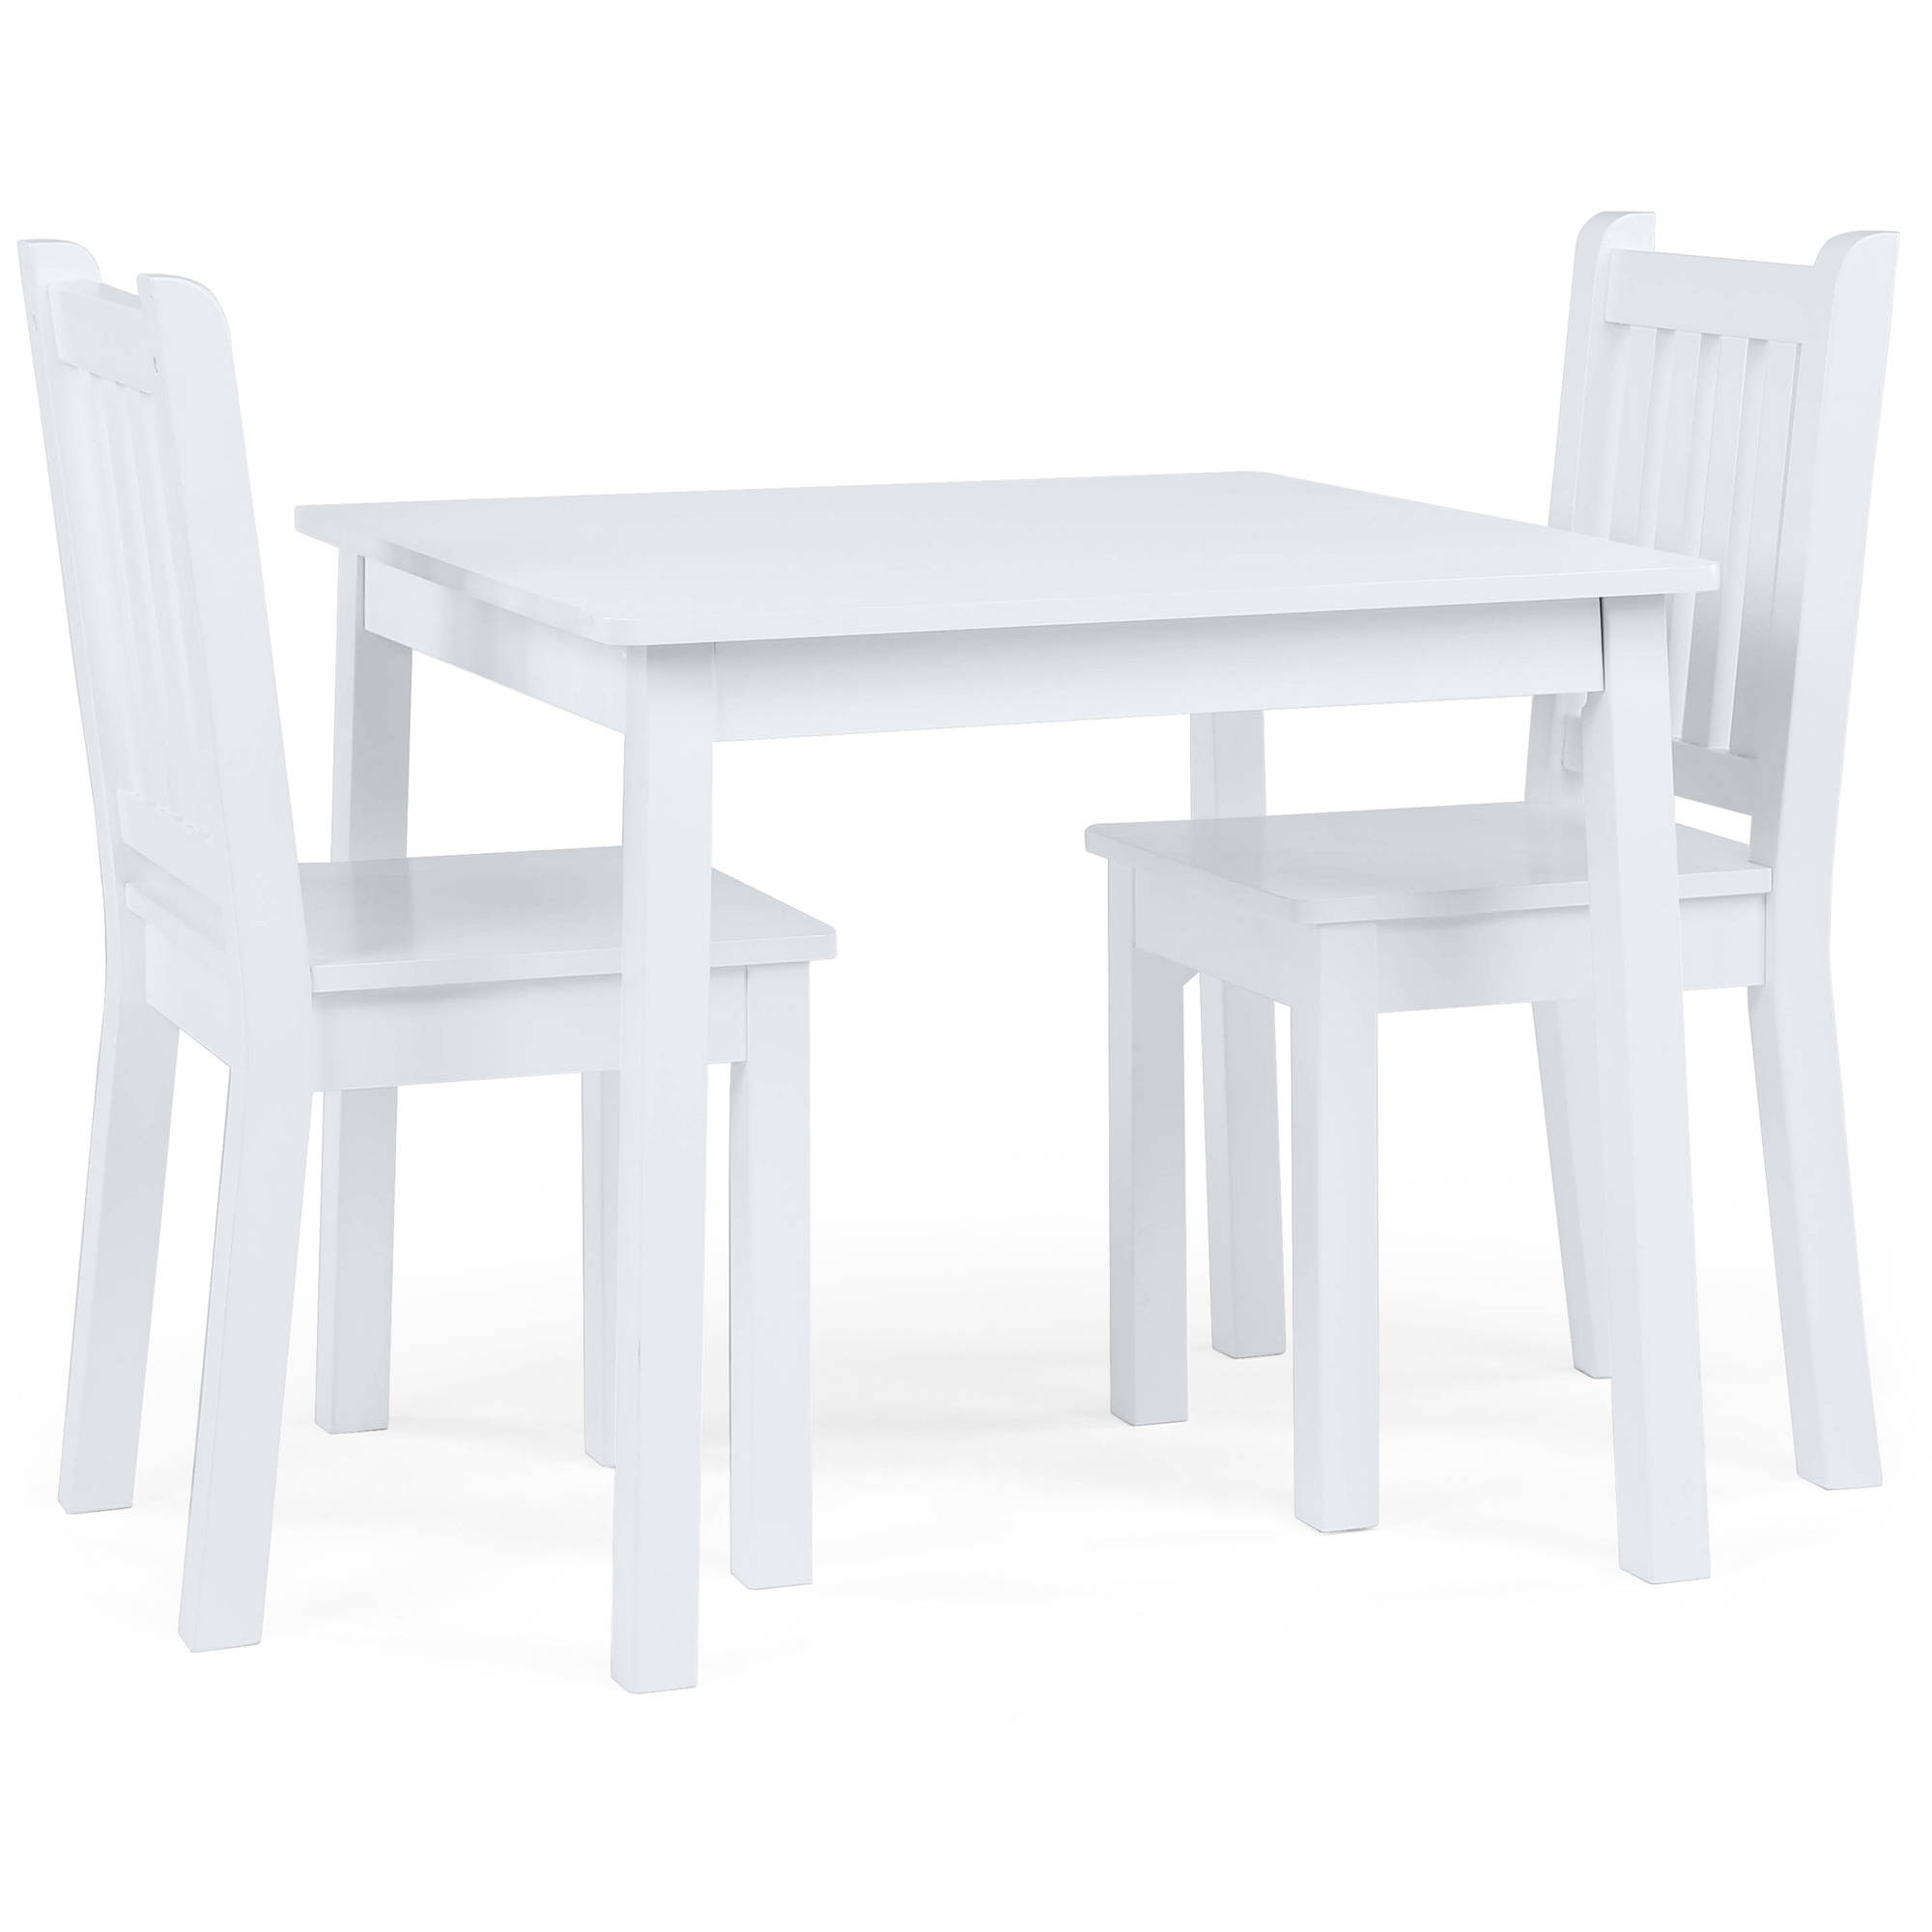 Walmart Kids Table Set
 Humble Crew Kids Wood Table and 2 Chairs Set White